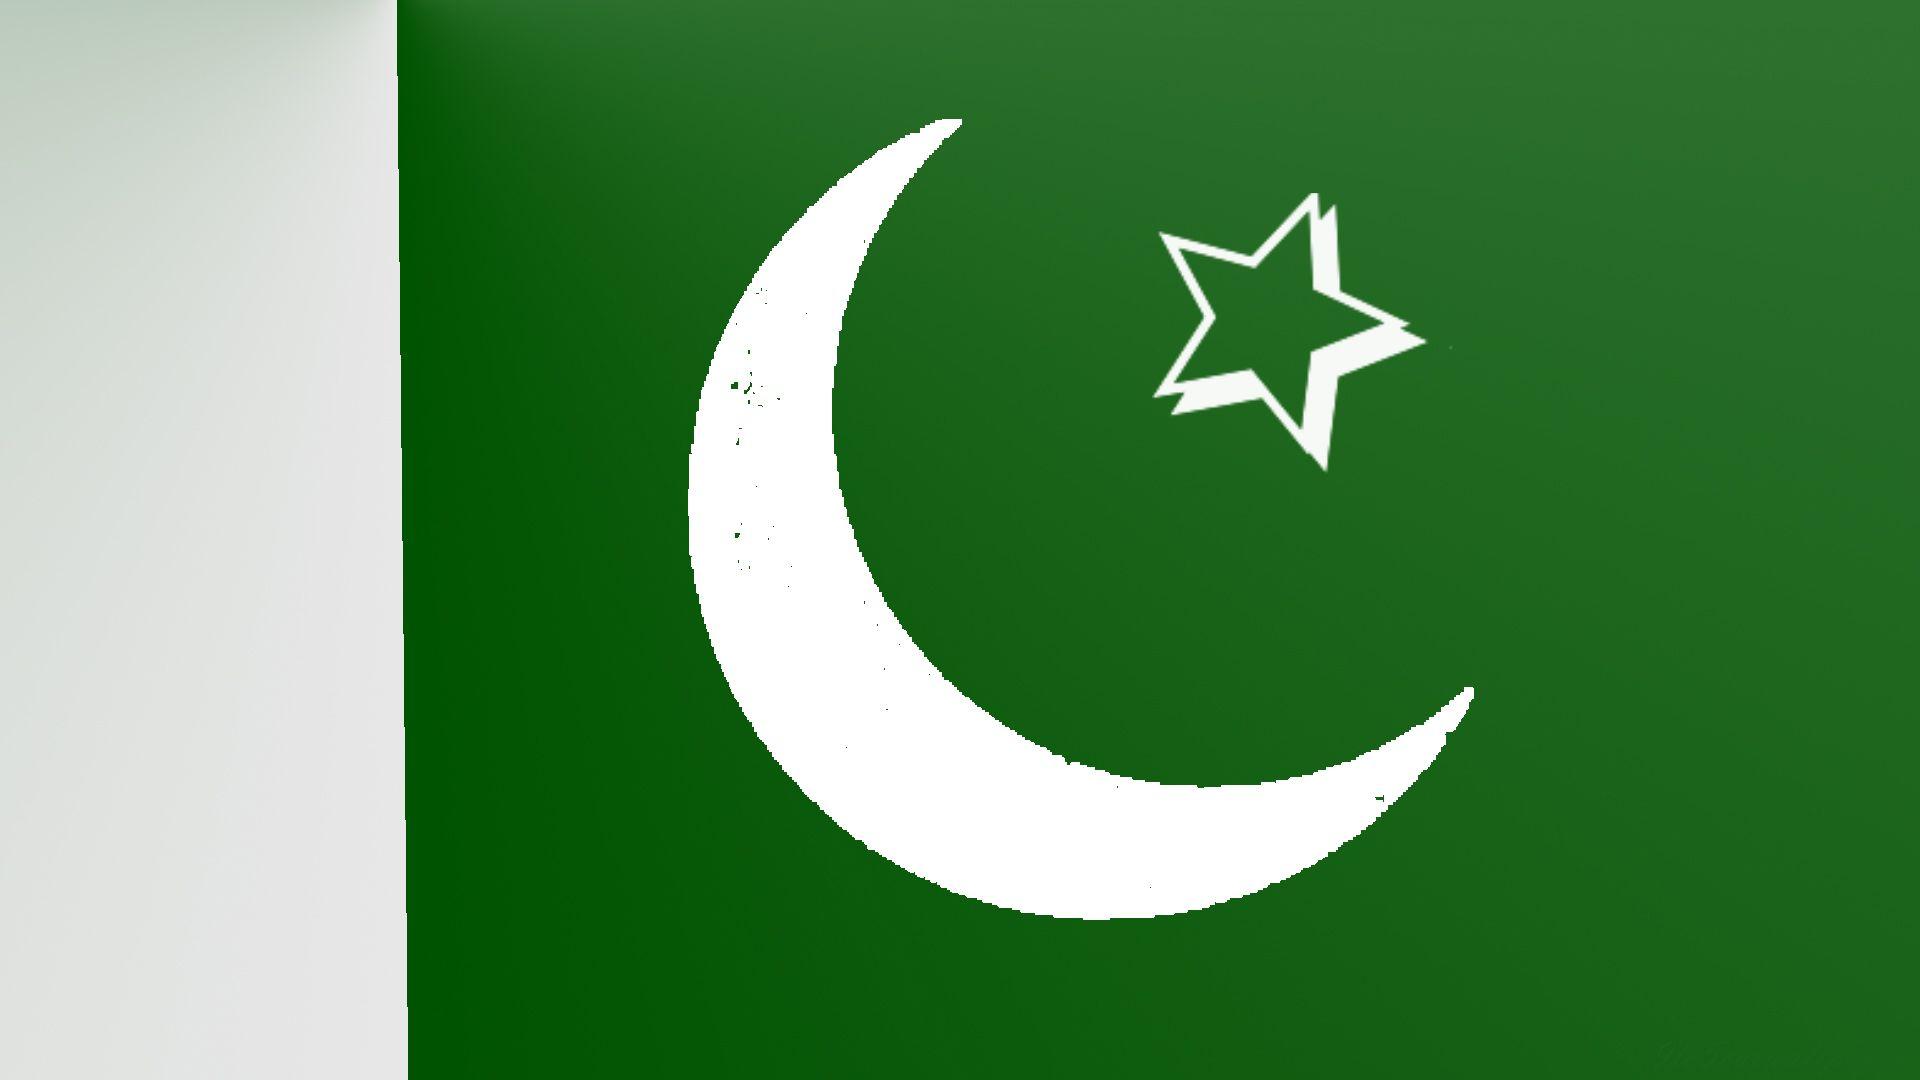 Latest Pics Of Pakistan Flag, Image & wallpaper 2017